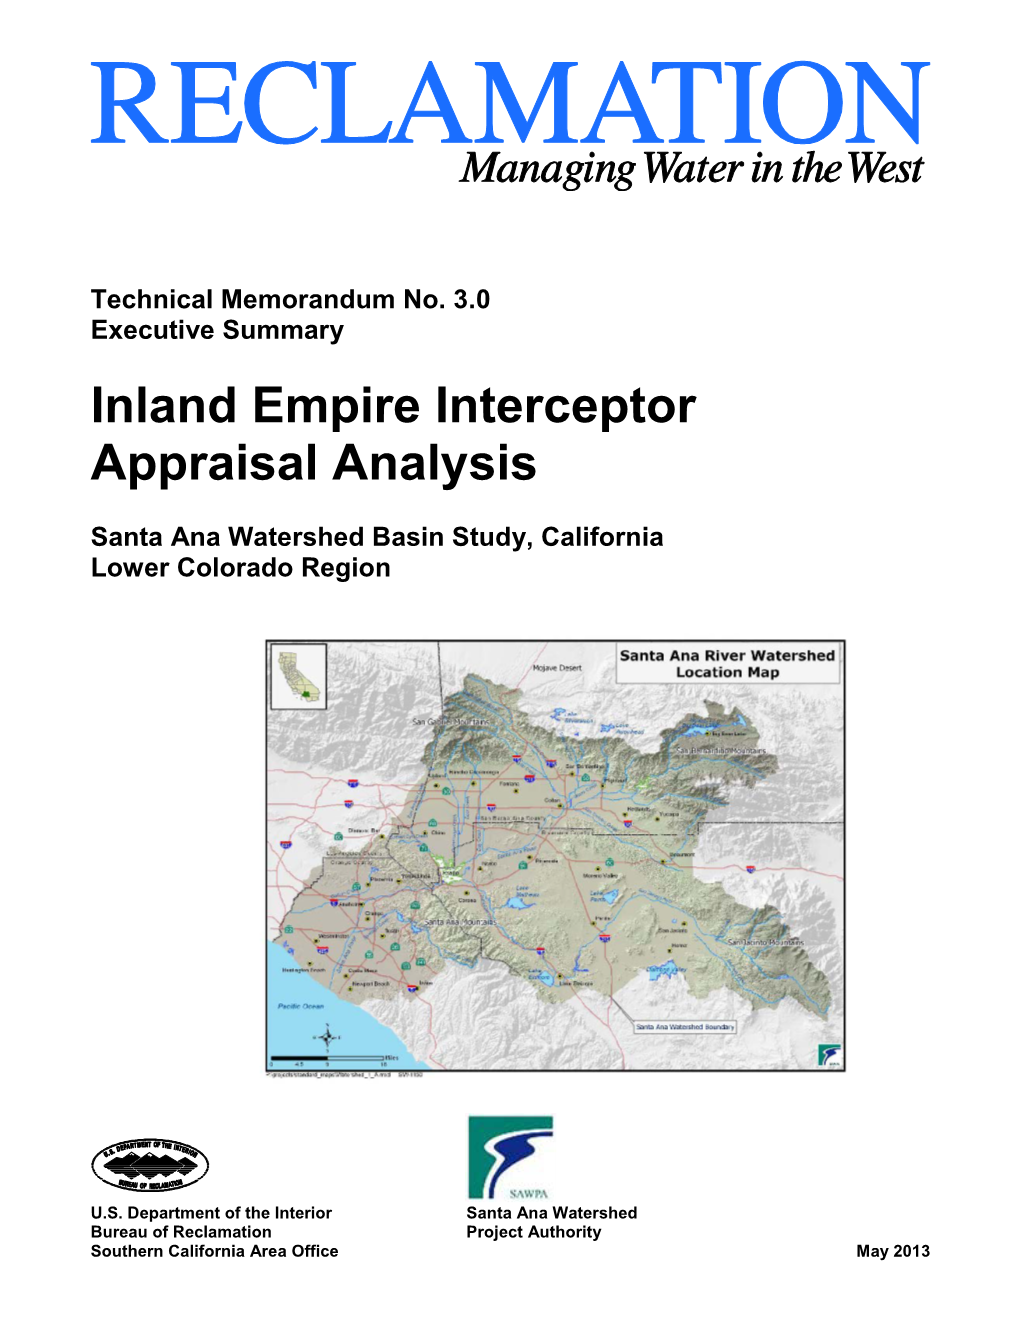 Inland Empire Interceptor Appraisal Analysis